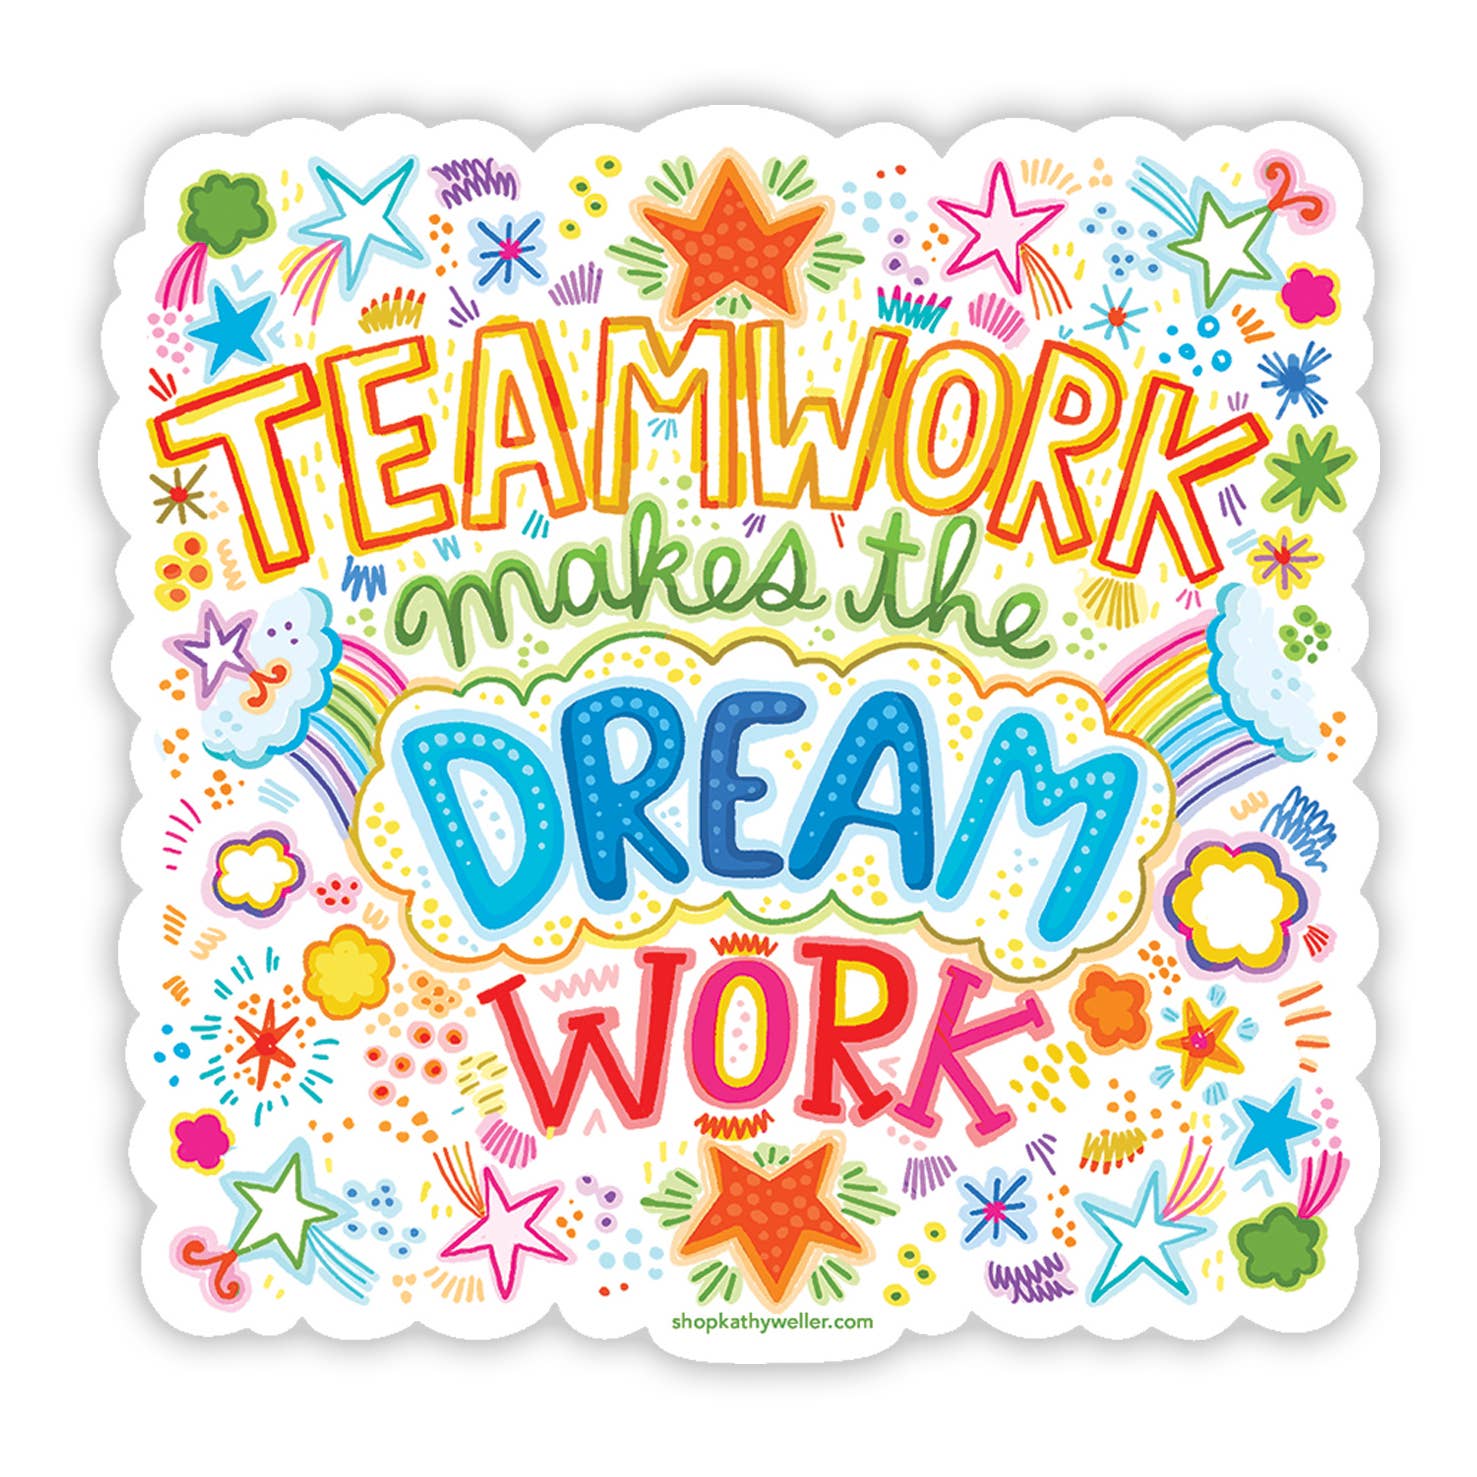 Teamwork Makes The Dream Work Sticker - Spiral Circle